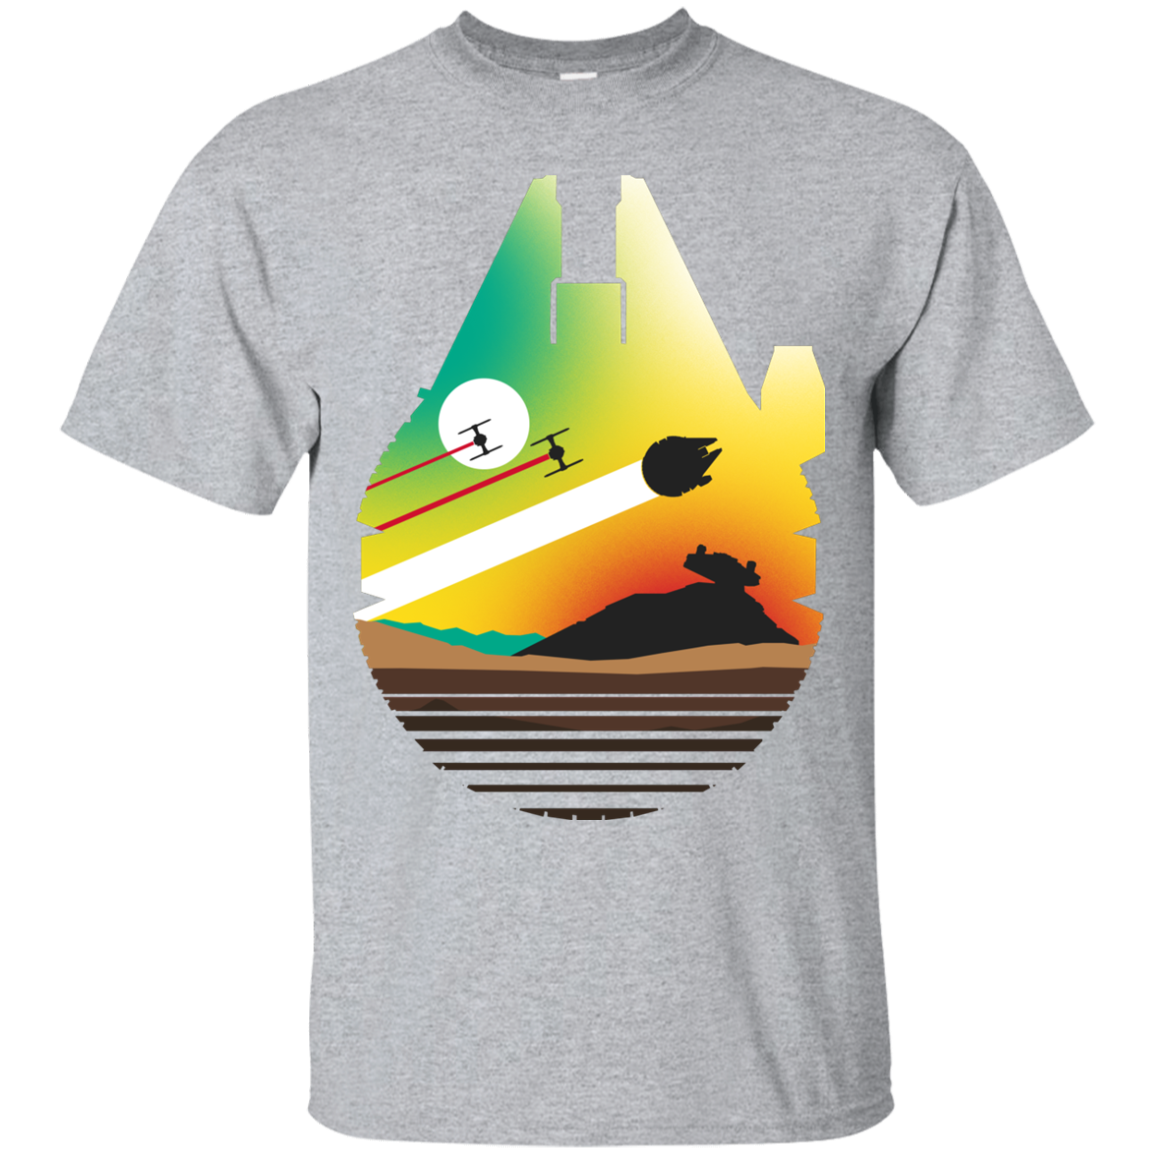 Escape from Desert Planet T-Shirt